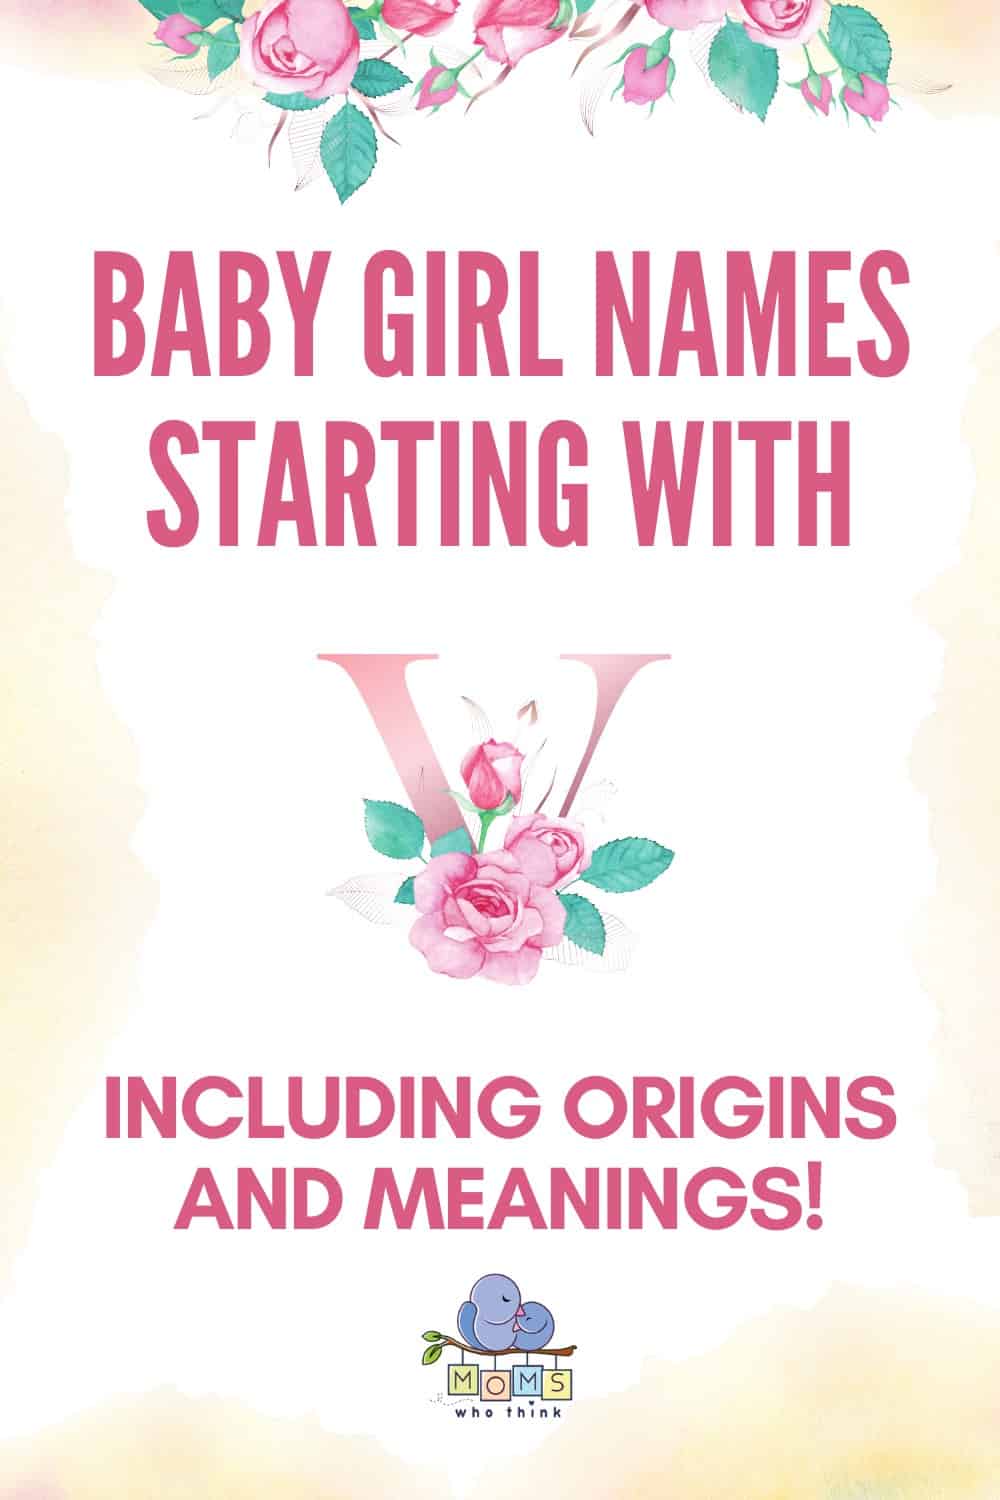 Baby girl names starting with V